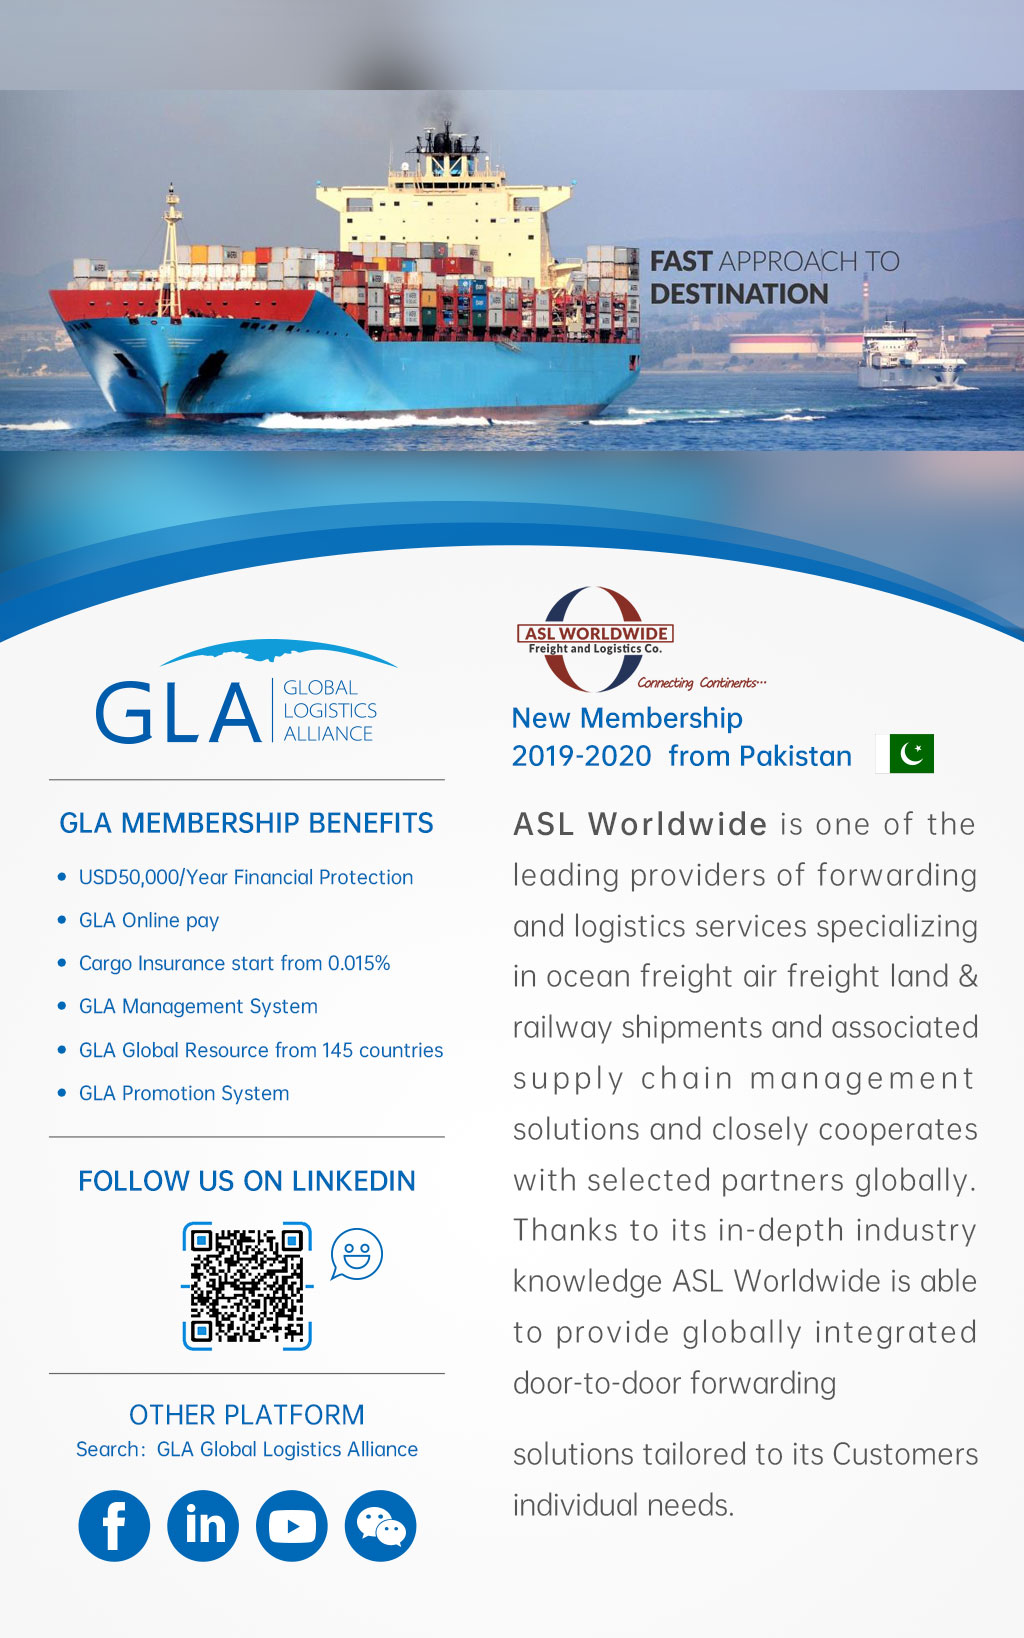 GLA Membership Renewal — ASL Worldwide Freight & Logistics from Pakistan